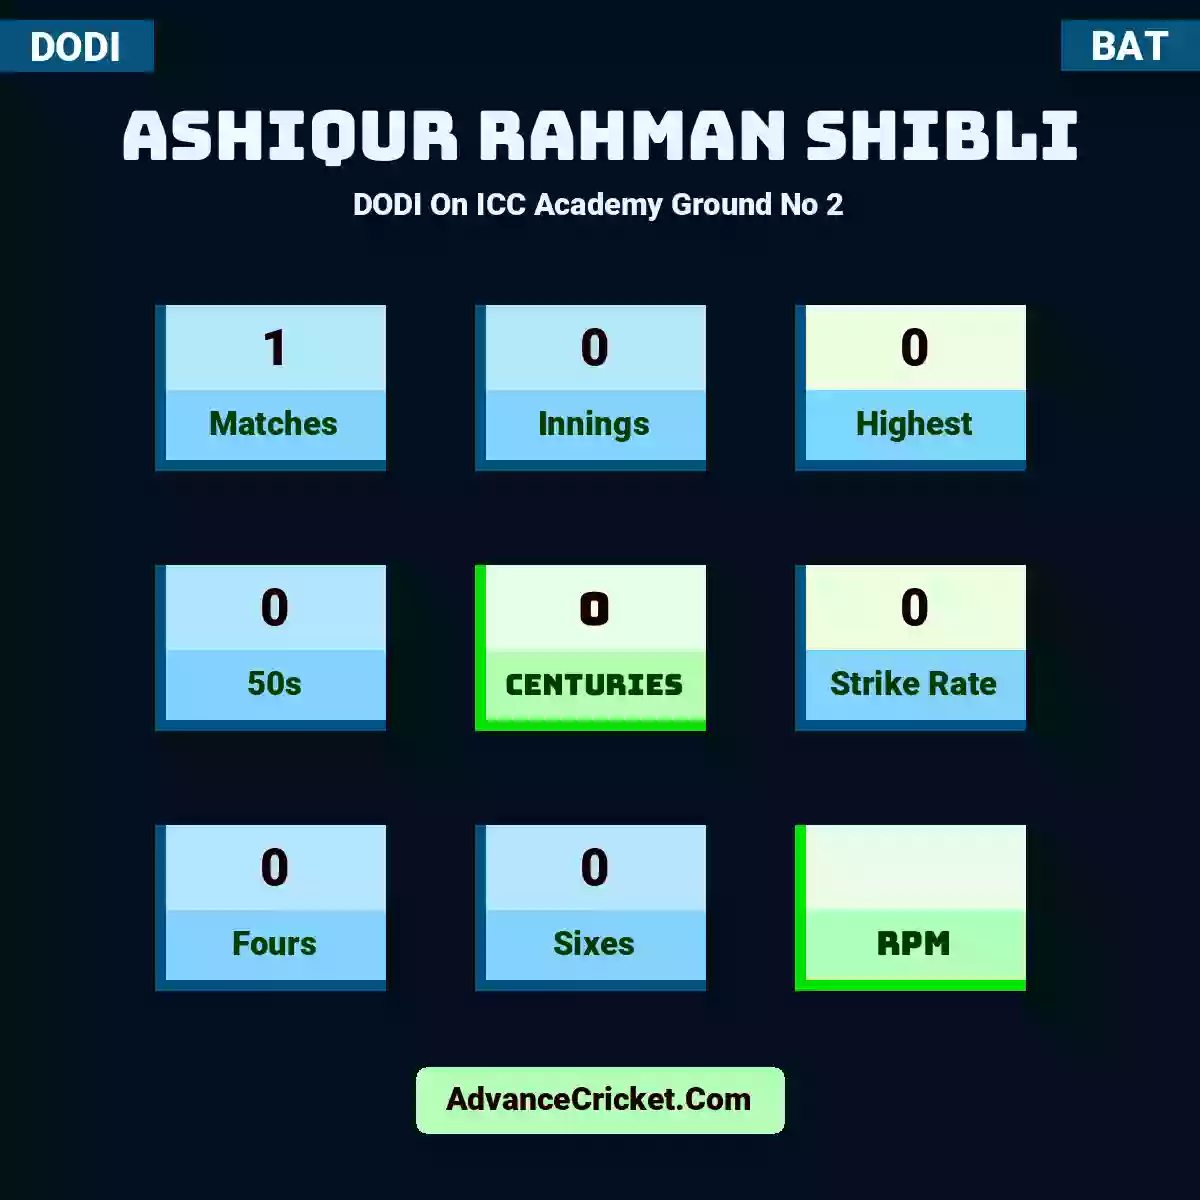 Ashiqur Rahman Shibli DODI  On ICC Academy Ground No 2, Ashiqur Rahman Shibli played 1 matches, scored 0 runs as highest, 0 half-centuries, and 0 centuries, with a strike rate of 0. A.Rahman.Shibli hit 0 fours and 0 sixes.